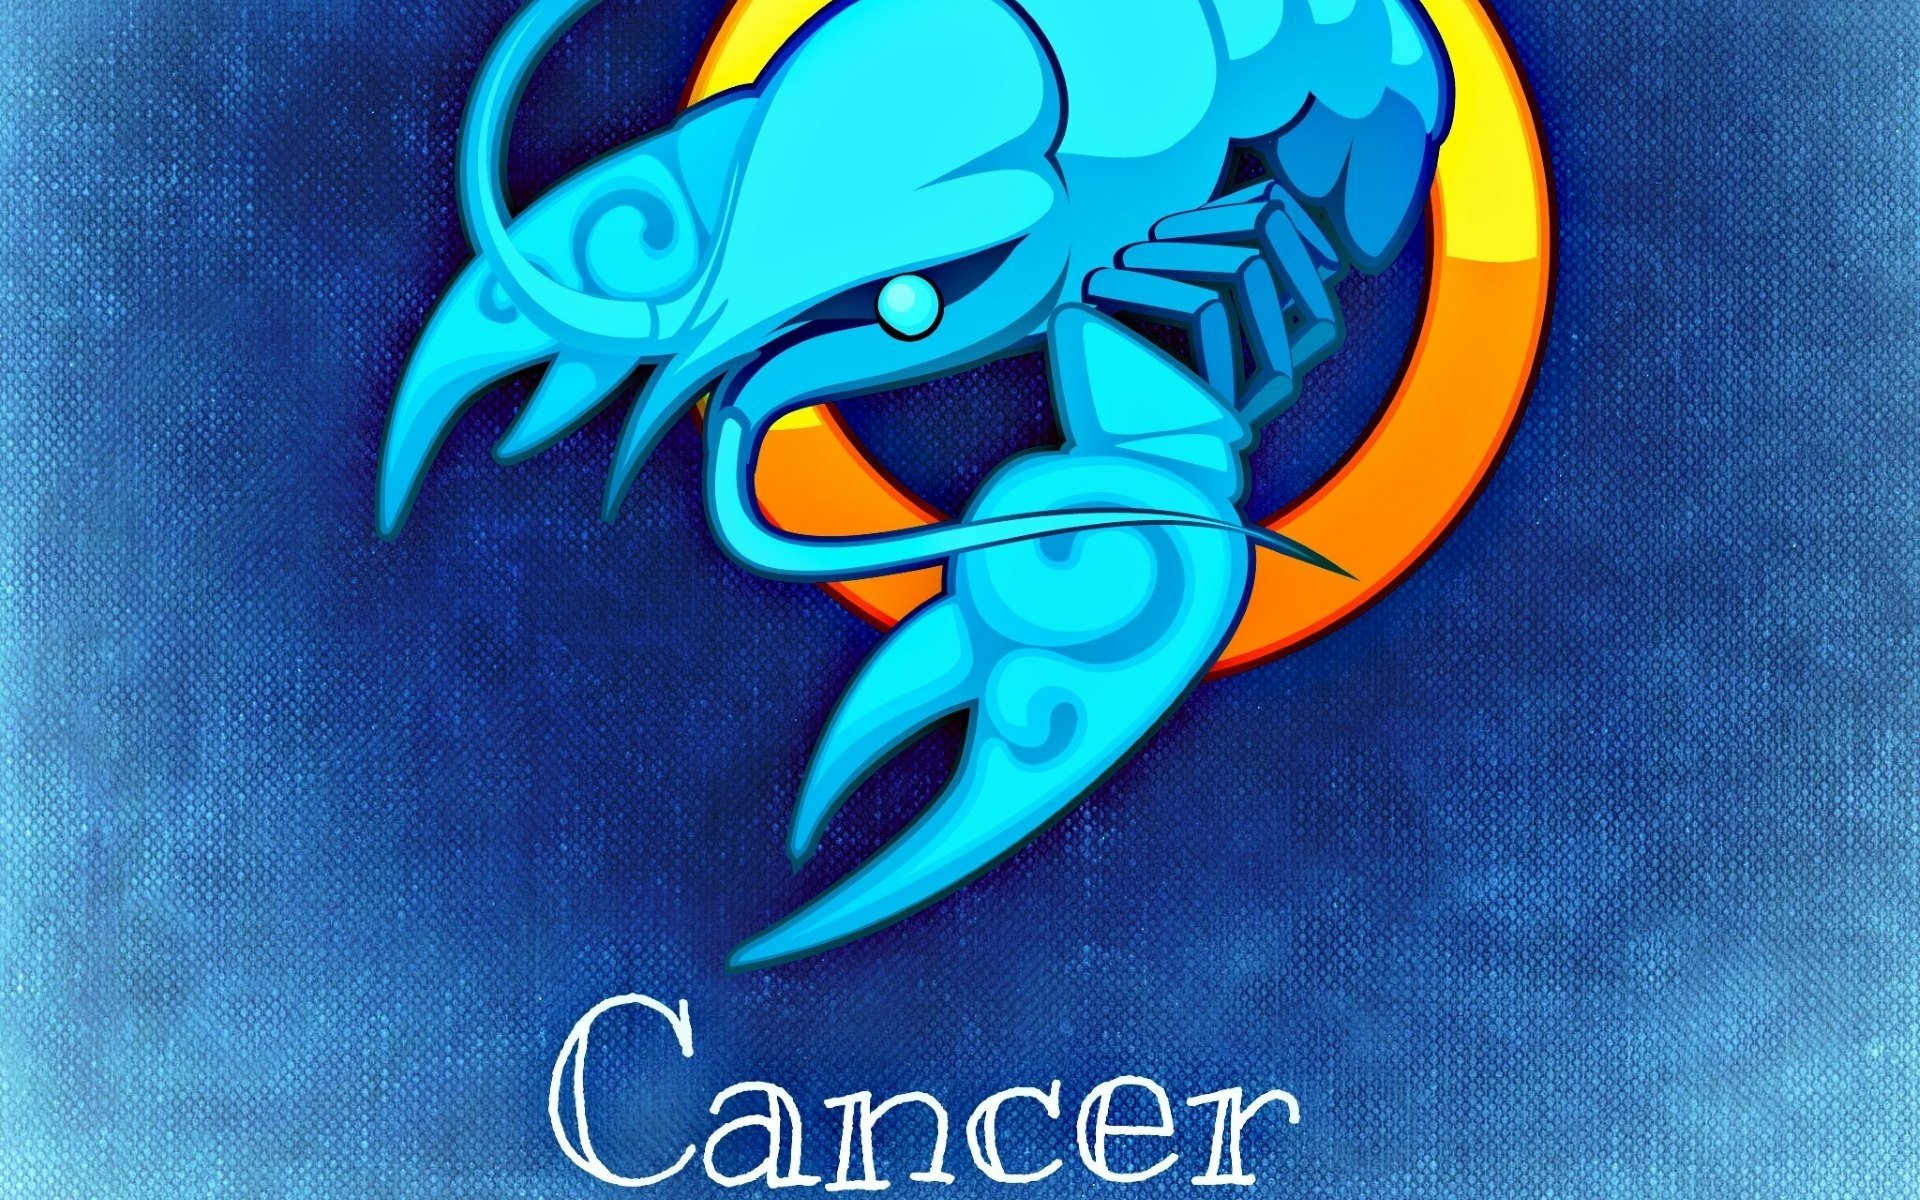 Zodiac Cancer Wallpaper 55 images